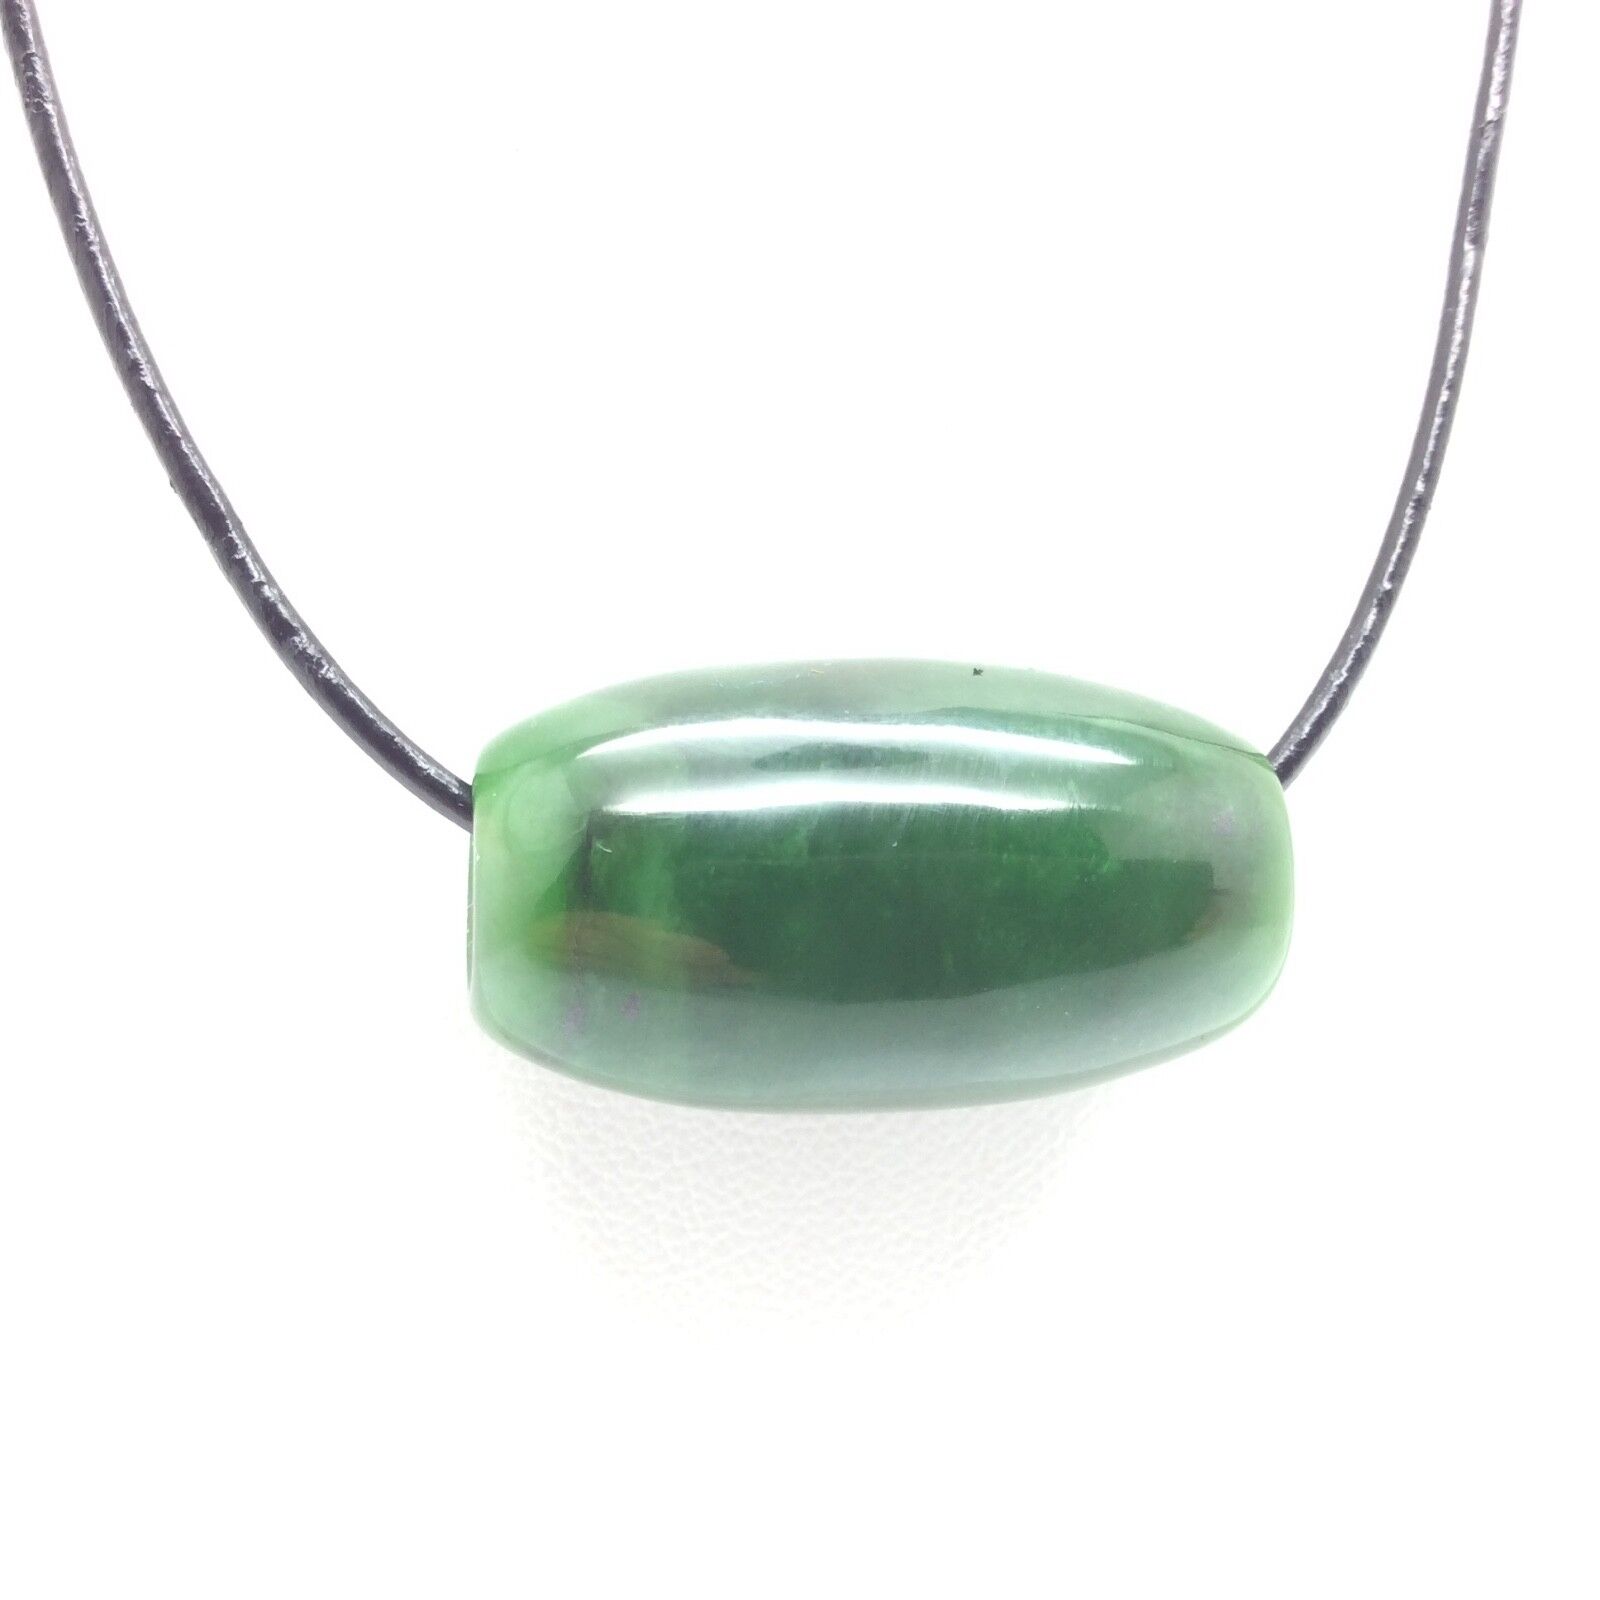 Canada Nephrite Jade Tube Bead Pendant Green Stone Necklace British Columbia #4